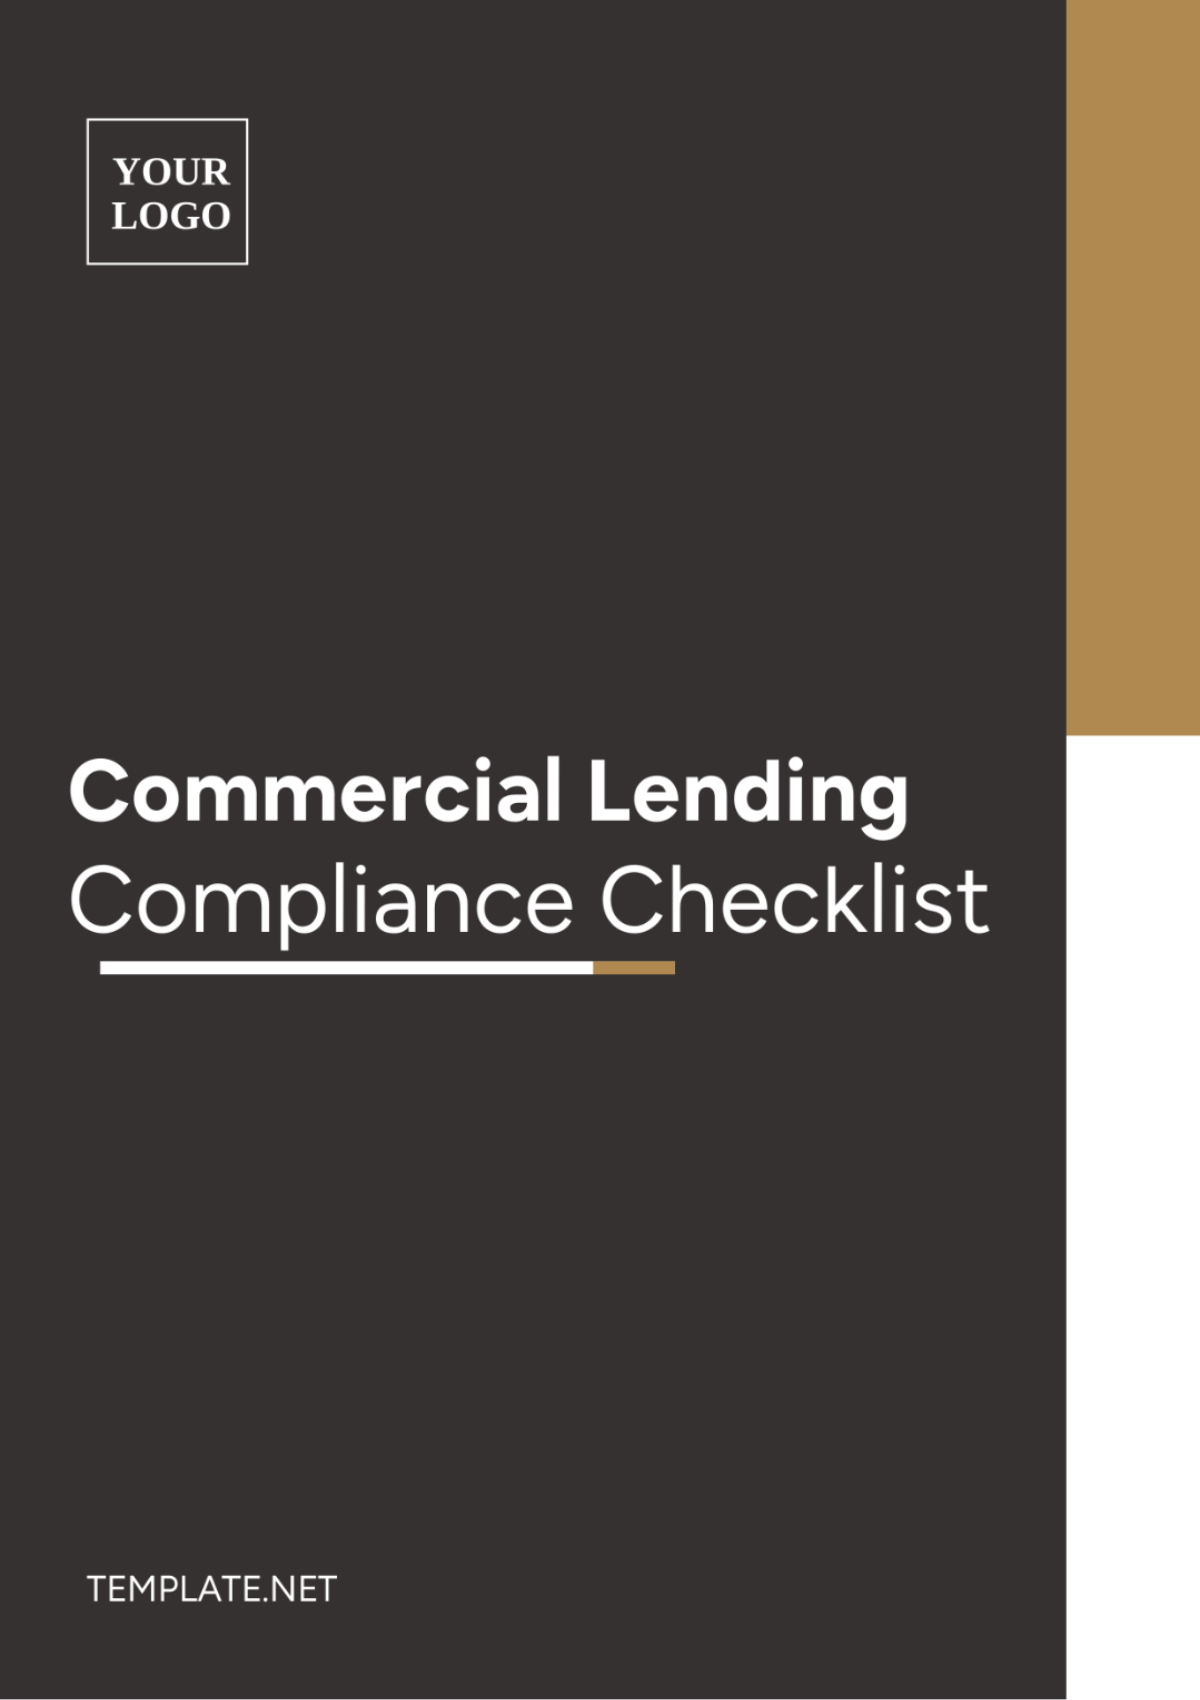 Commercial Lending Compliance Checklist Template